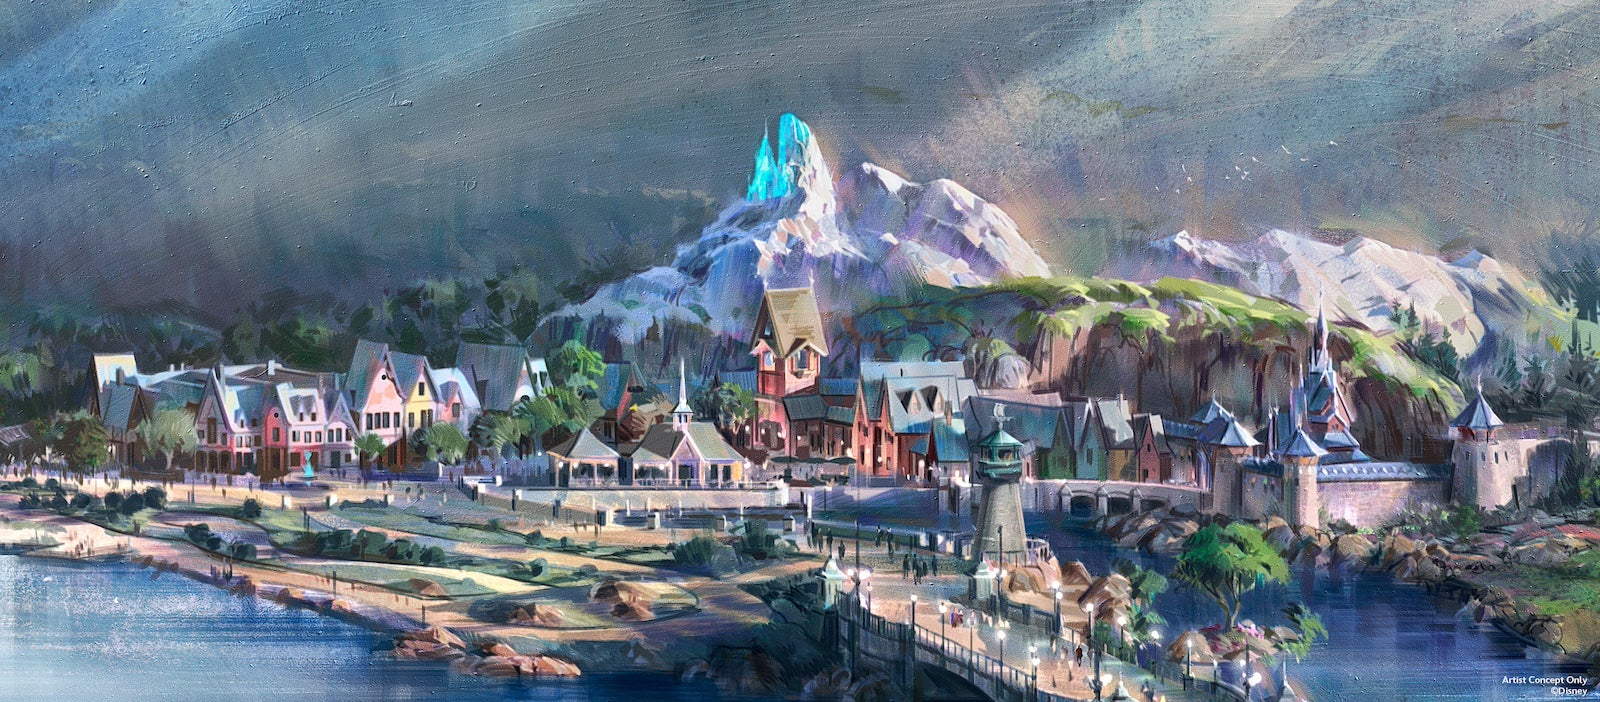 World of Frozen at Disney Adventure World